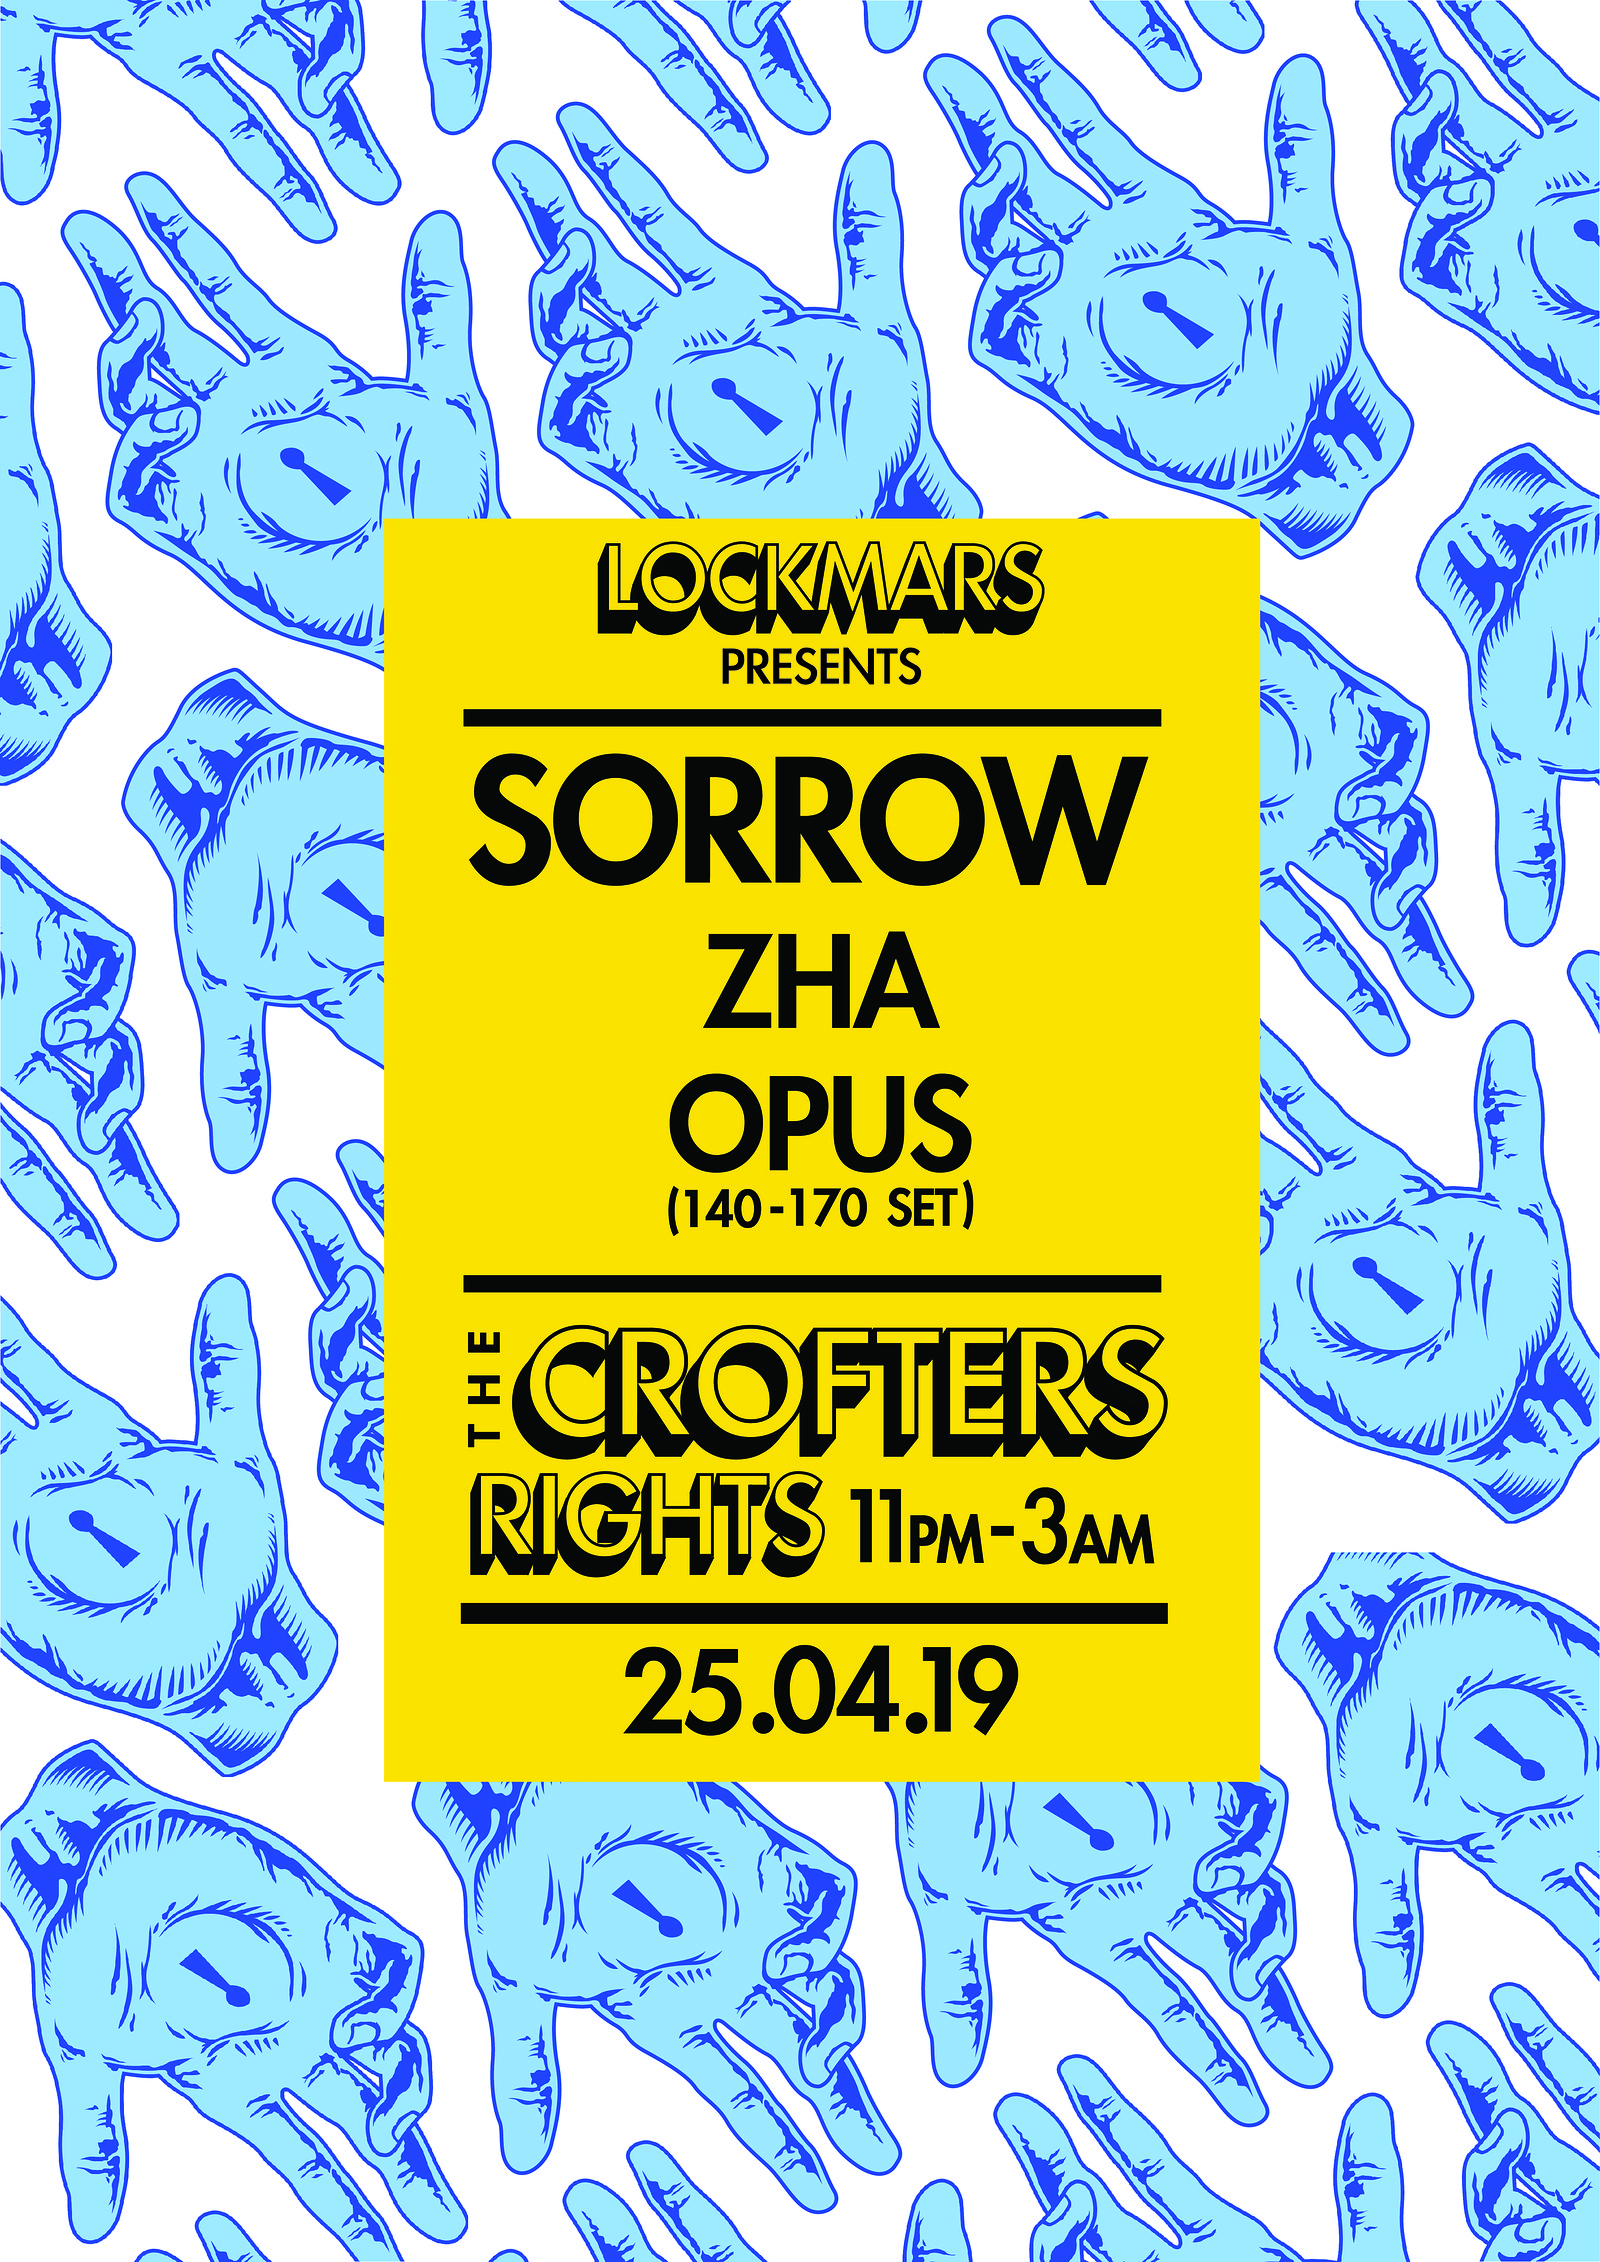 LockMars presents: Sorrow, Zha, Opus. at Crofters Rights